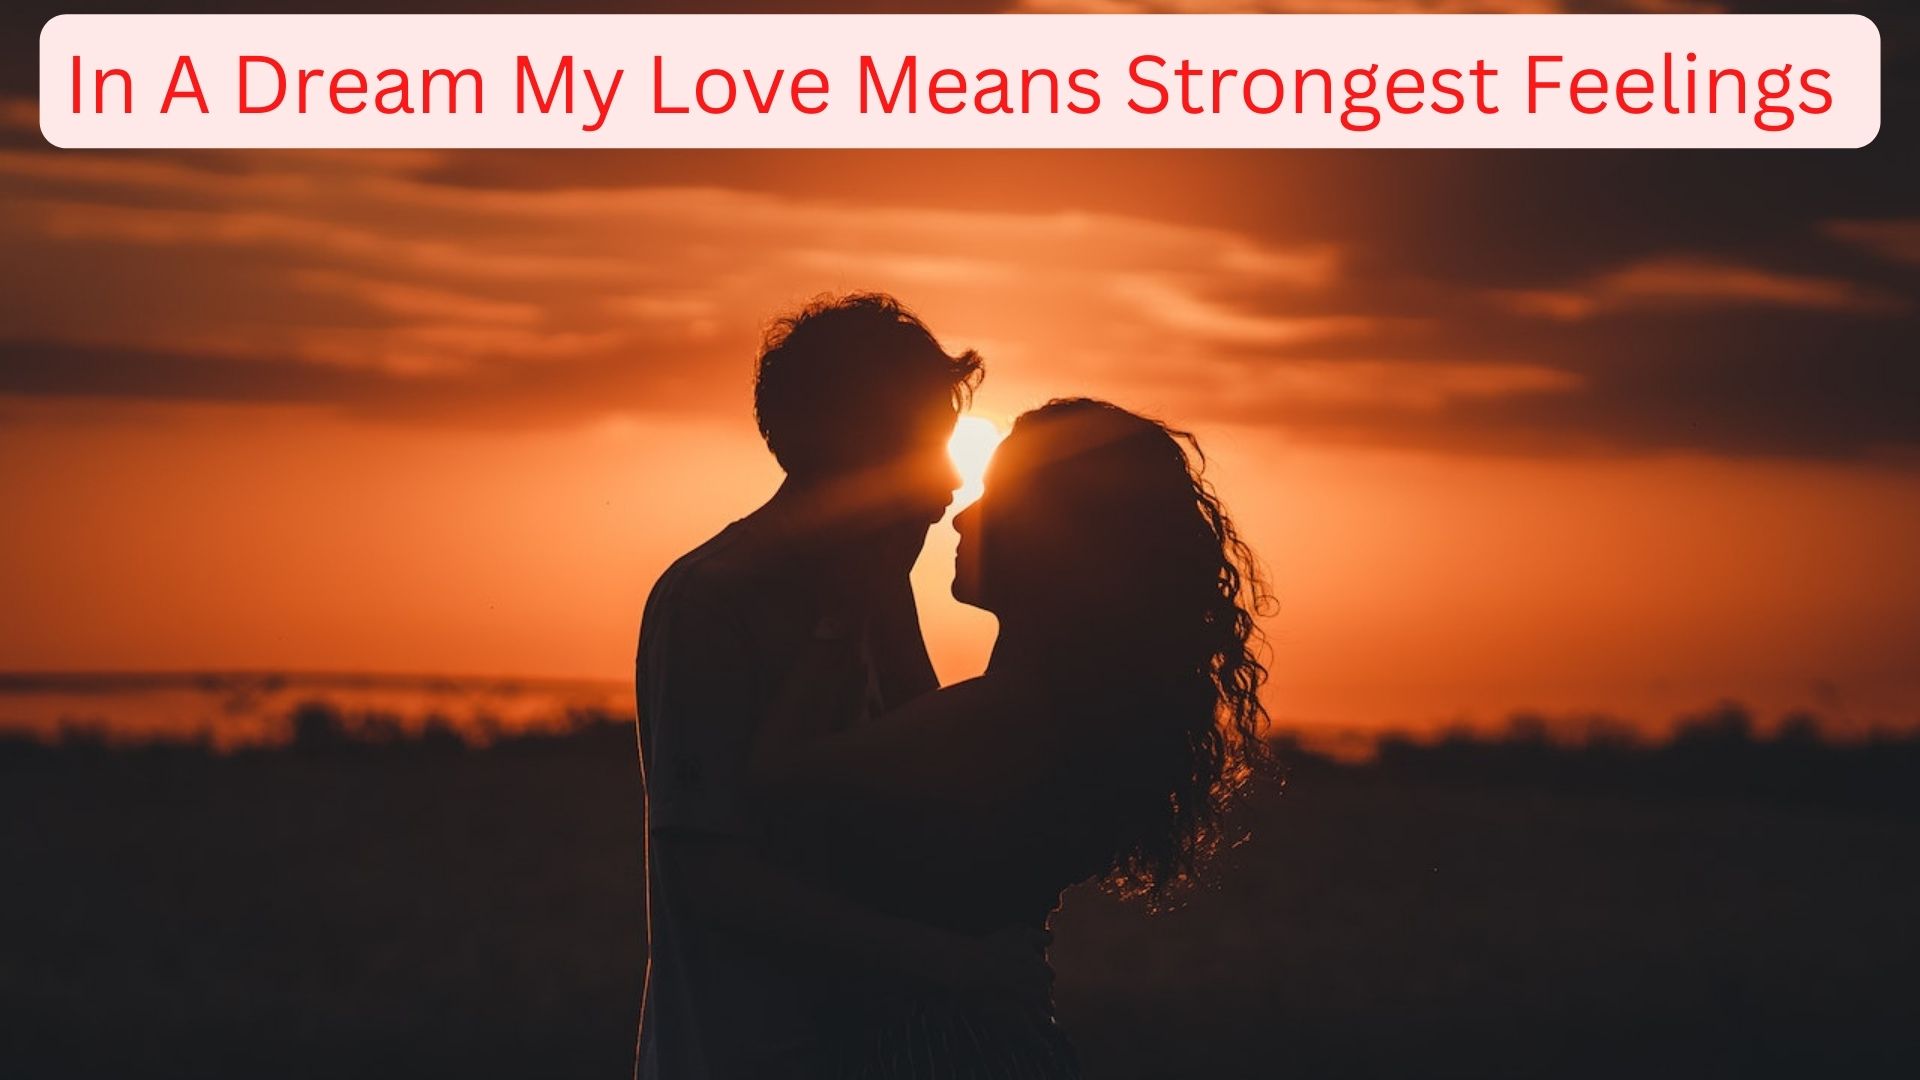 In A Dream My Love Meaning - Strongest Feelings